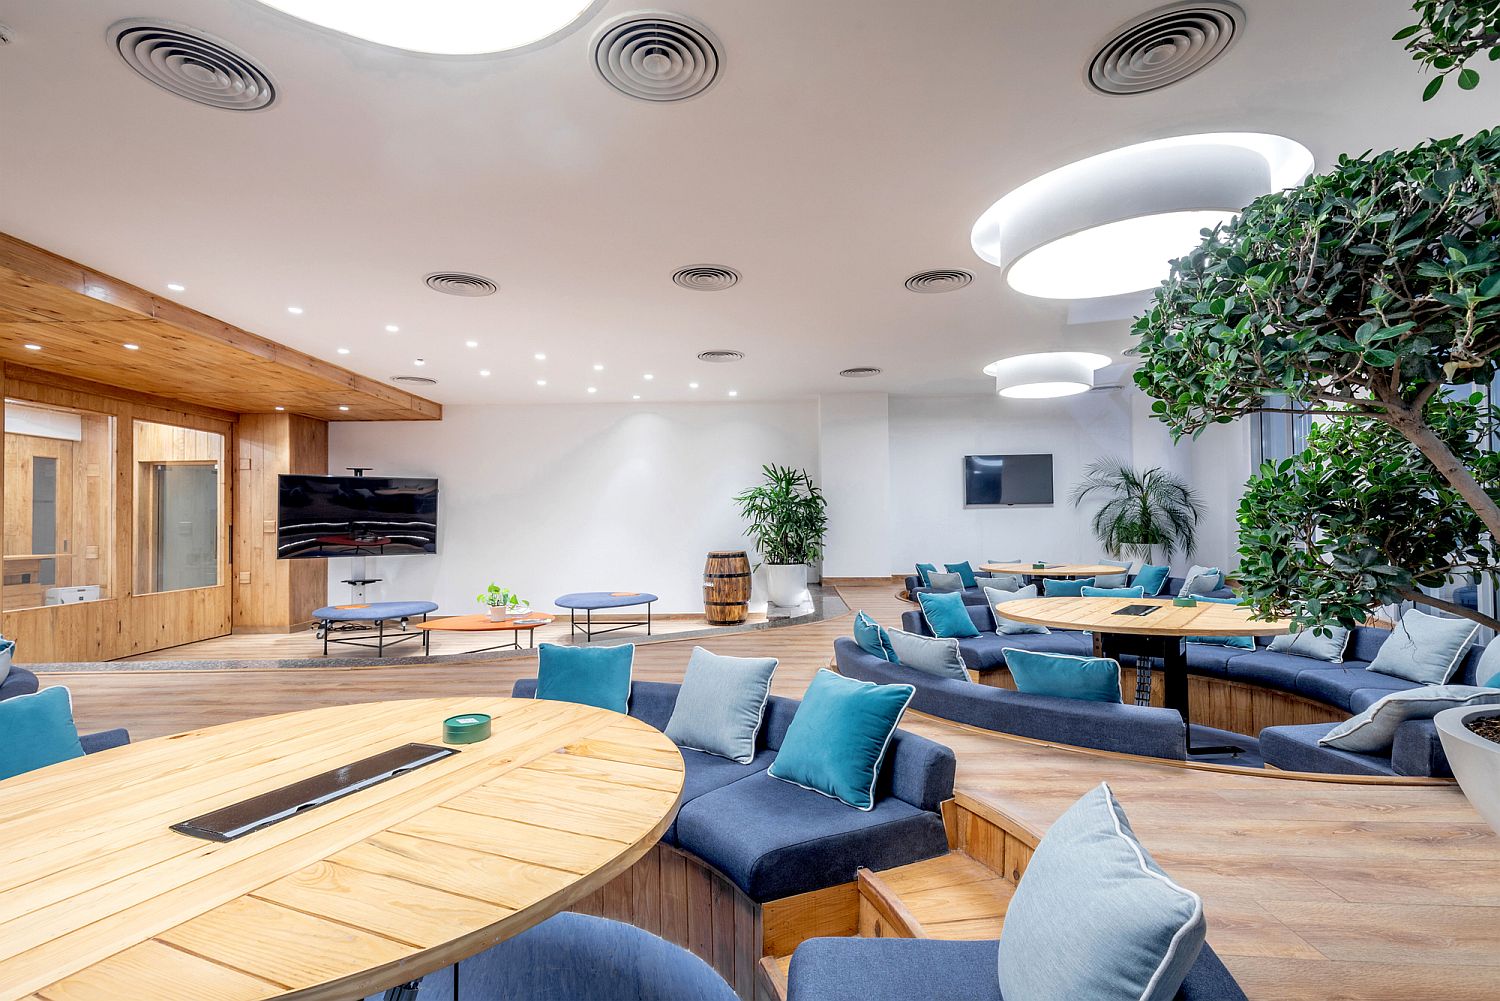 Circular wooden tables with tech-savvy design sit inside teh comfy sunken conversation zones